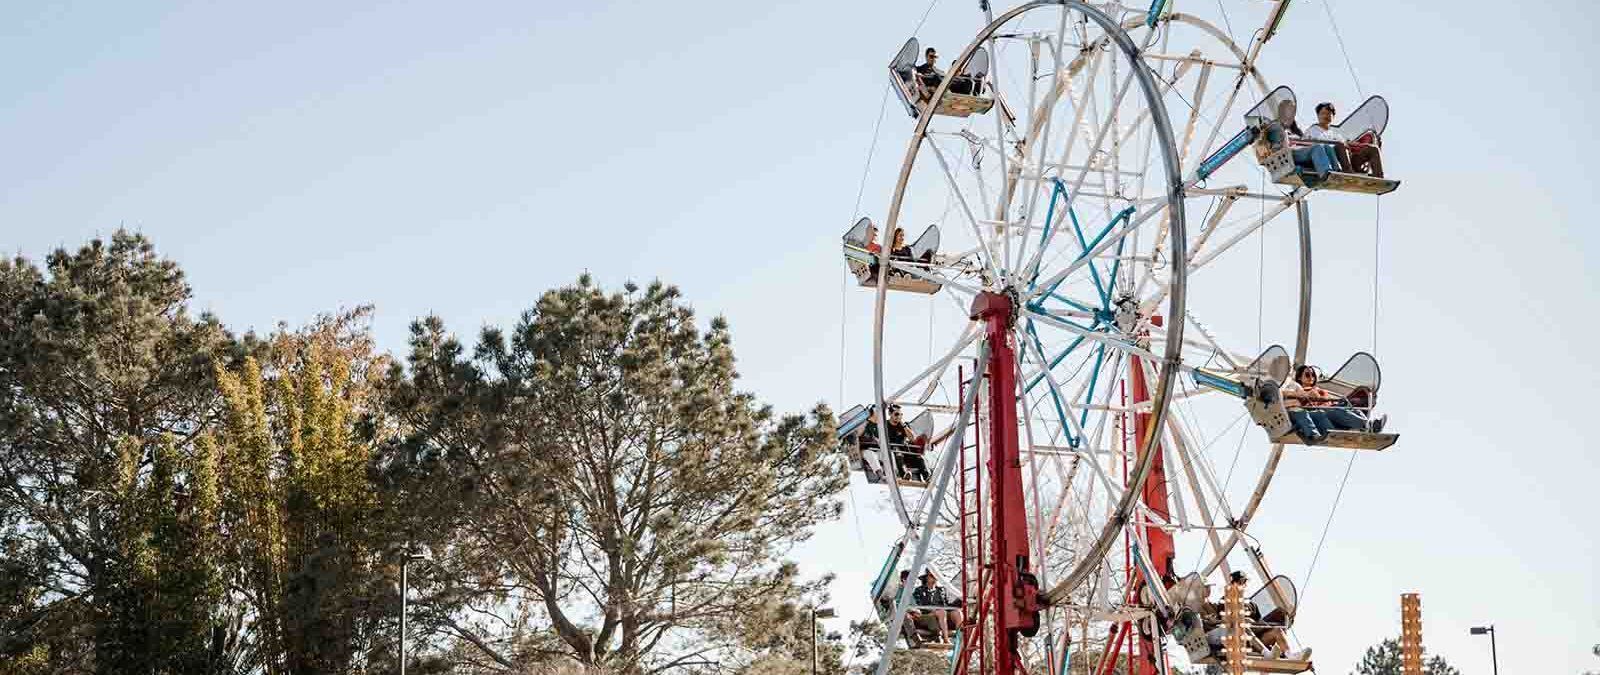 Ferris Wheel from PLNU Event